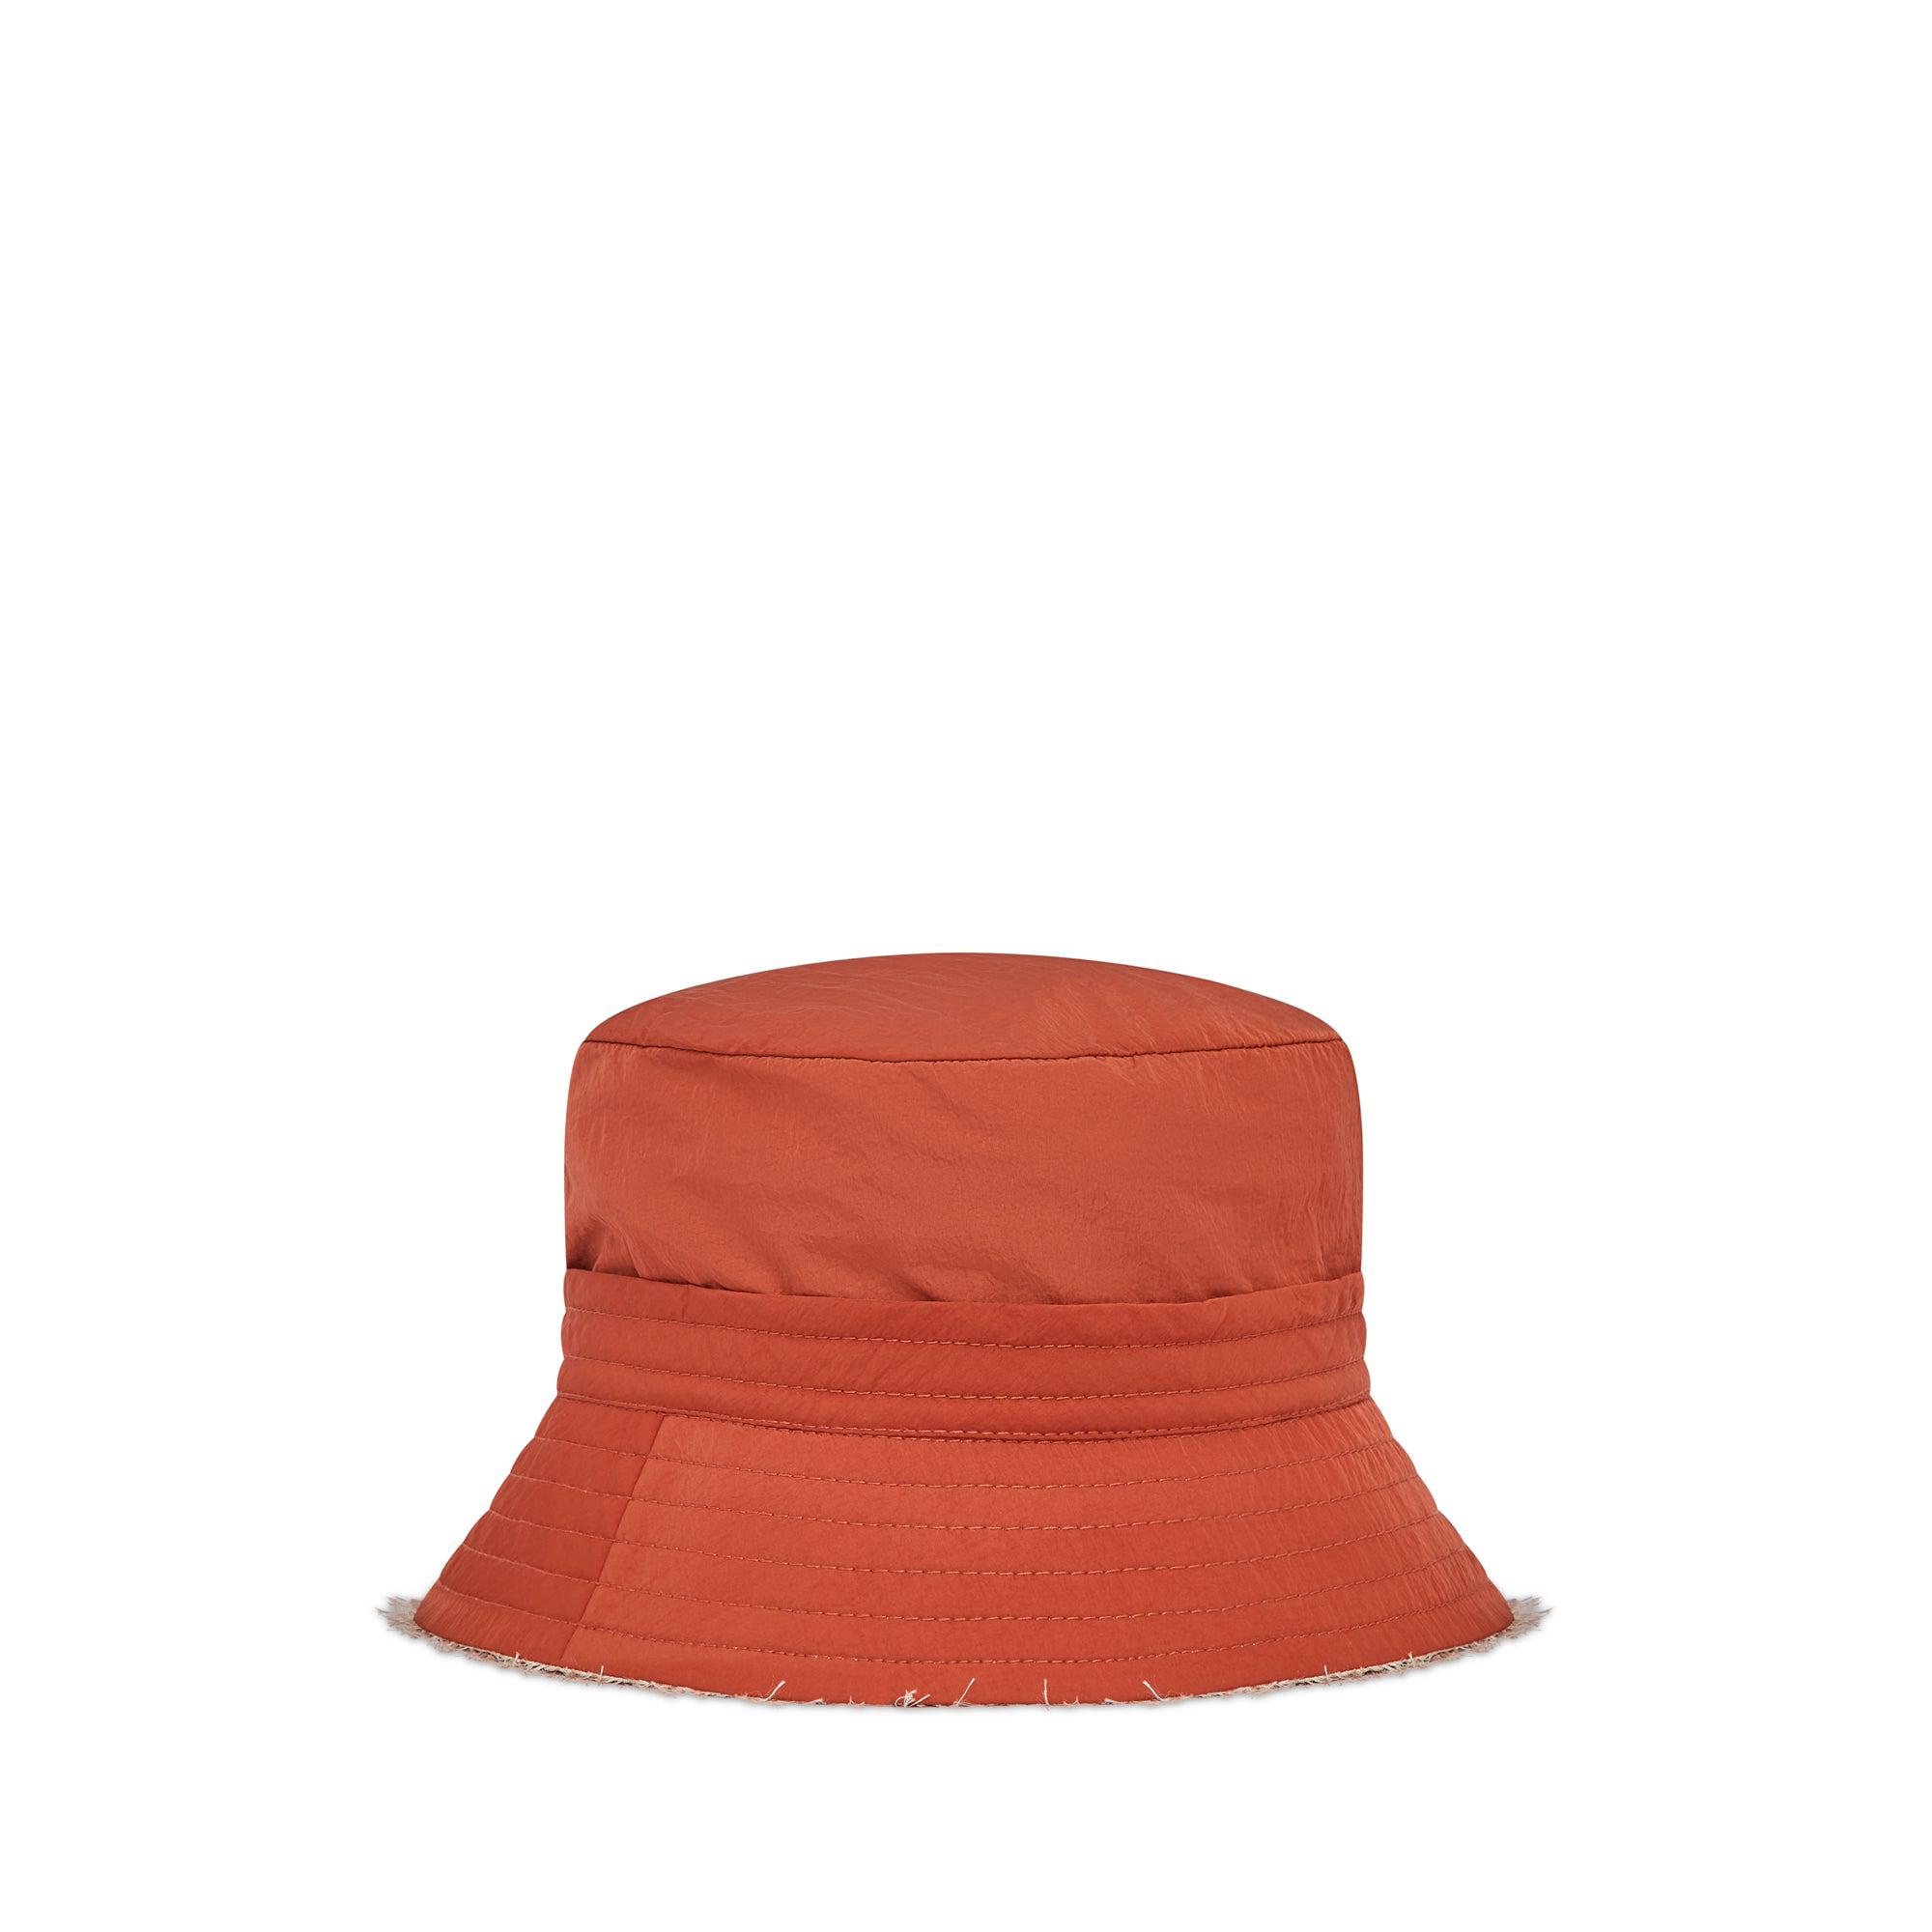 Craig Green Men's Reversible Bucket Hat (Red/Pink) by CRAIG GREEN